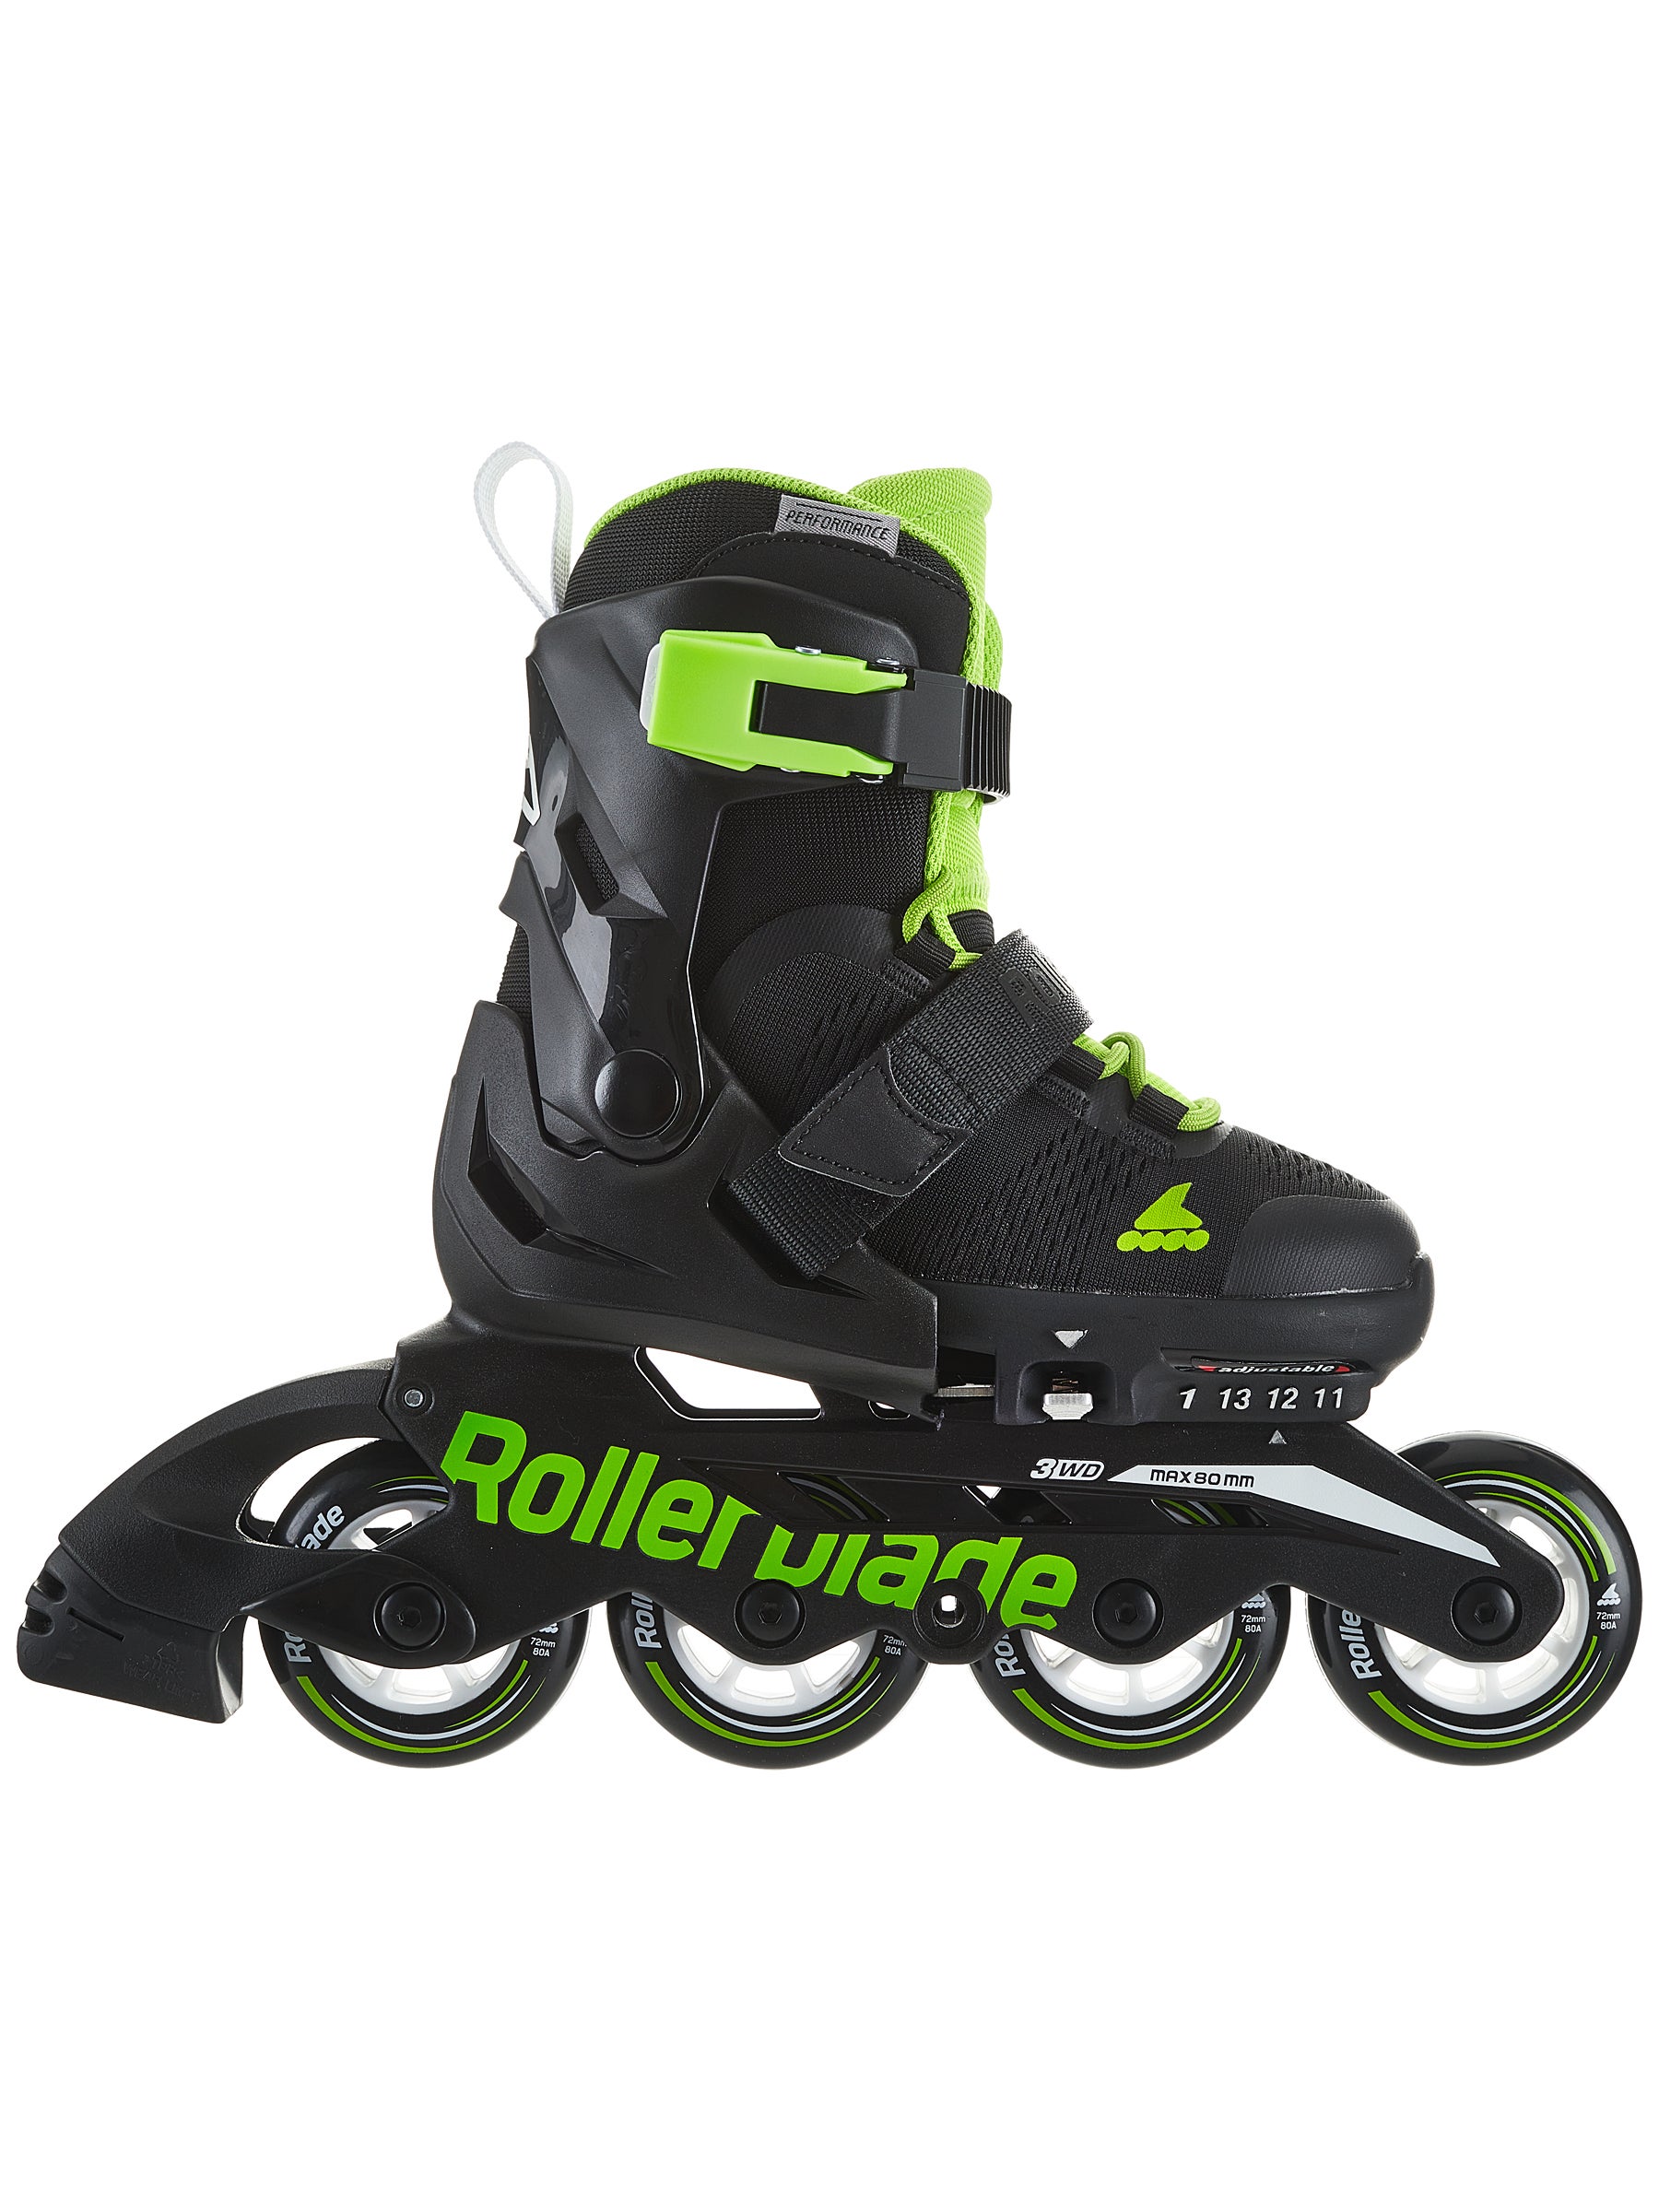 Details about   Adjustable Inline Skates Kids Adult Rollerblades Wheel Safety cap Protecti 